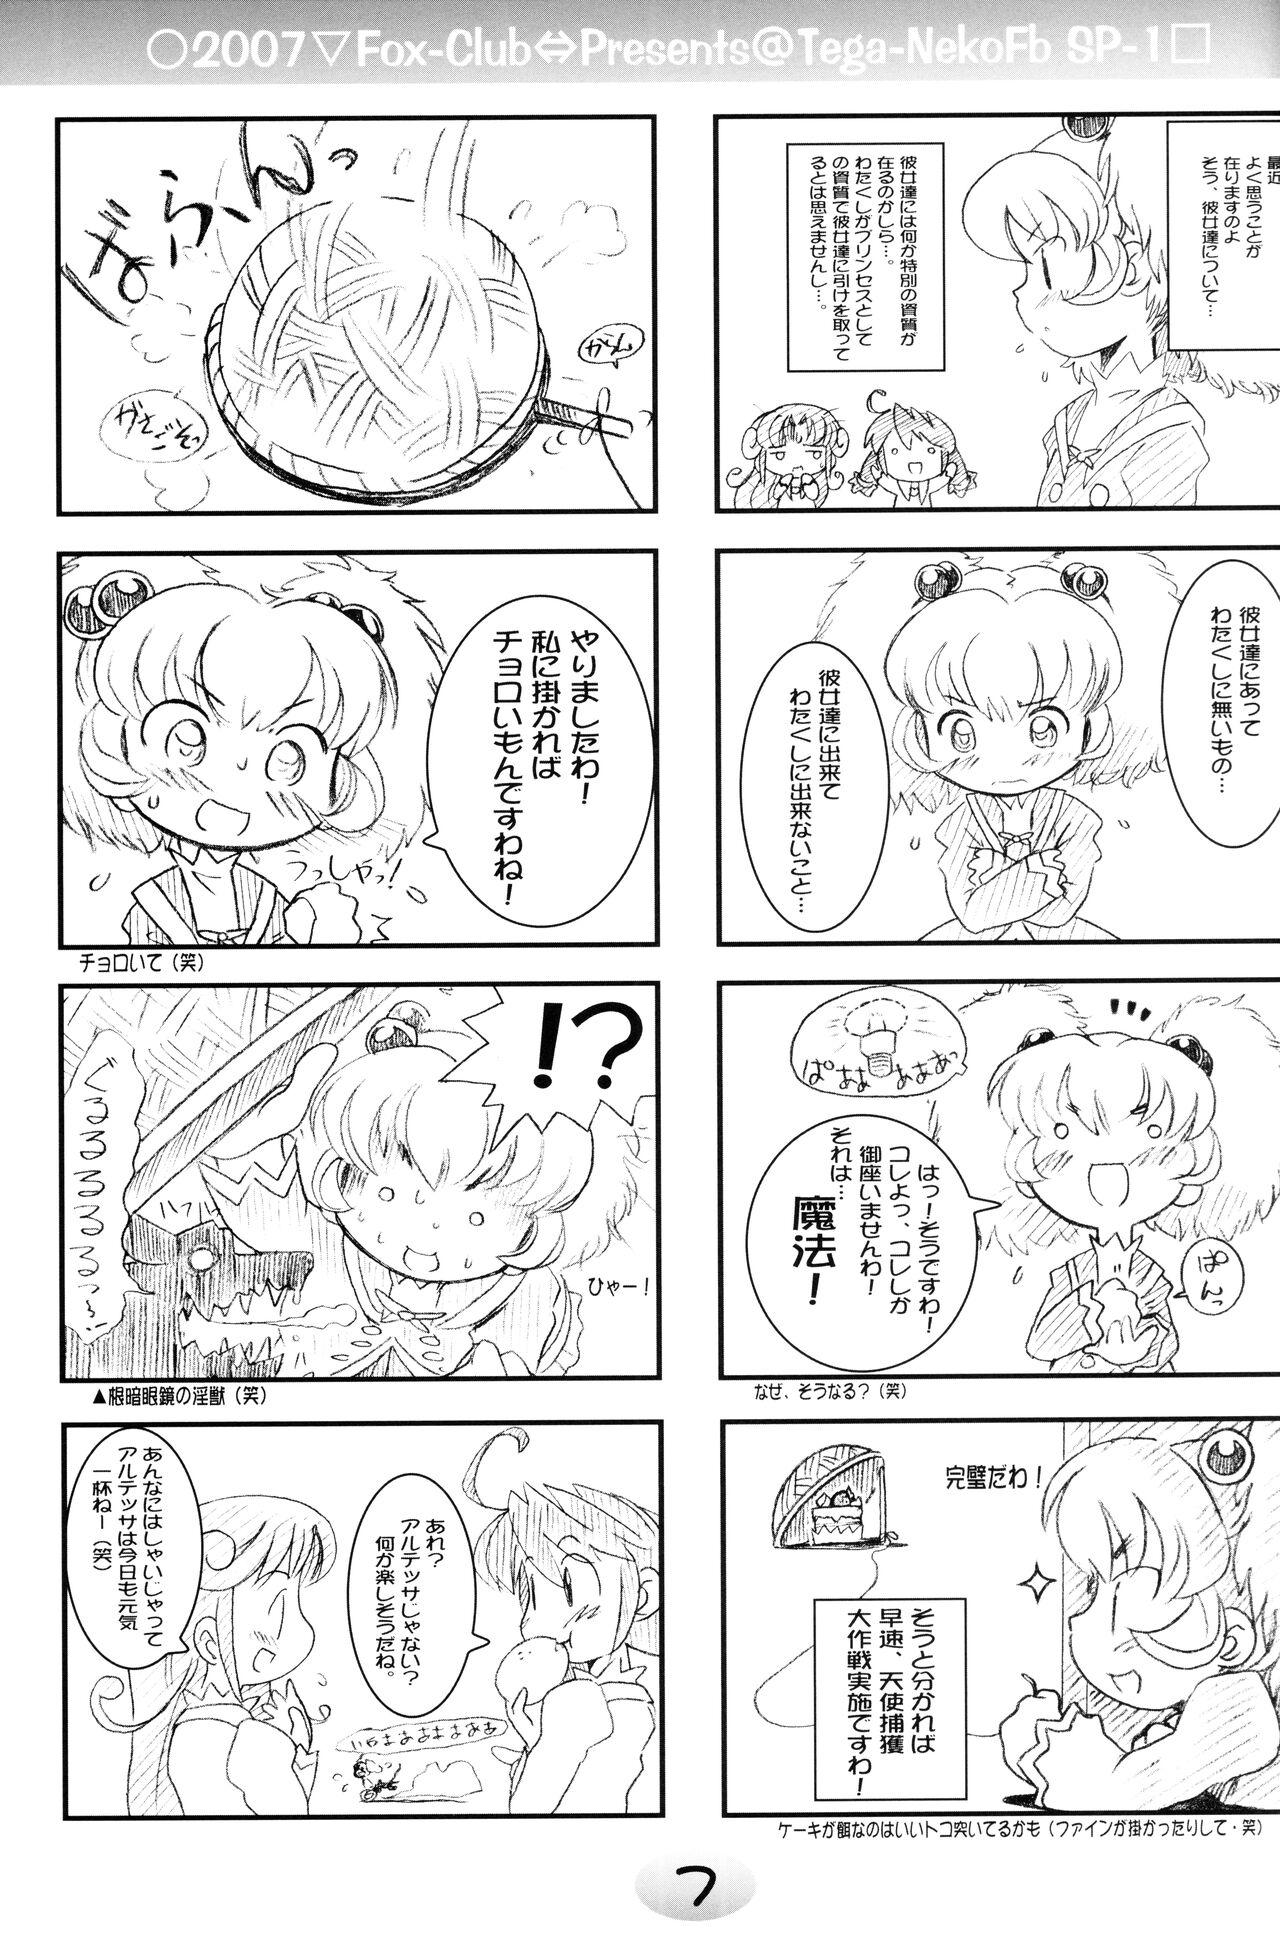 Roludo TeGa-NeKo Fb/SP Futago Hime Plus - Fushigiboshi no futagohime | twin princesses of the wonder planet Pmv - Page 5